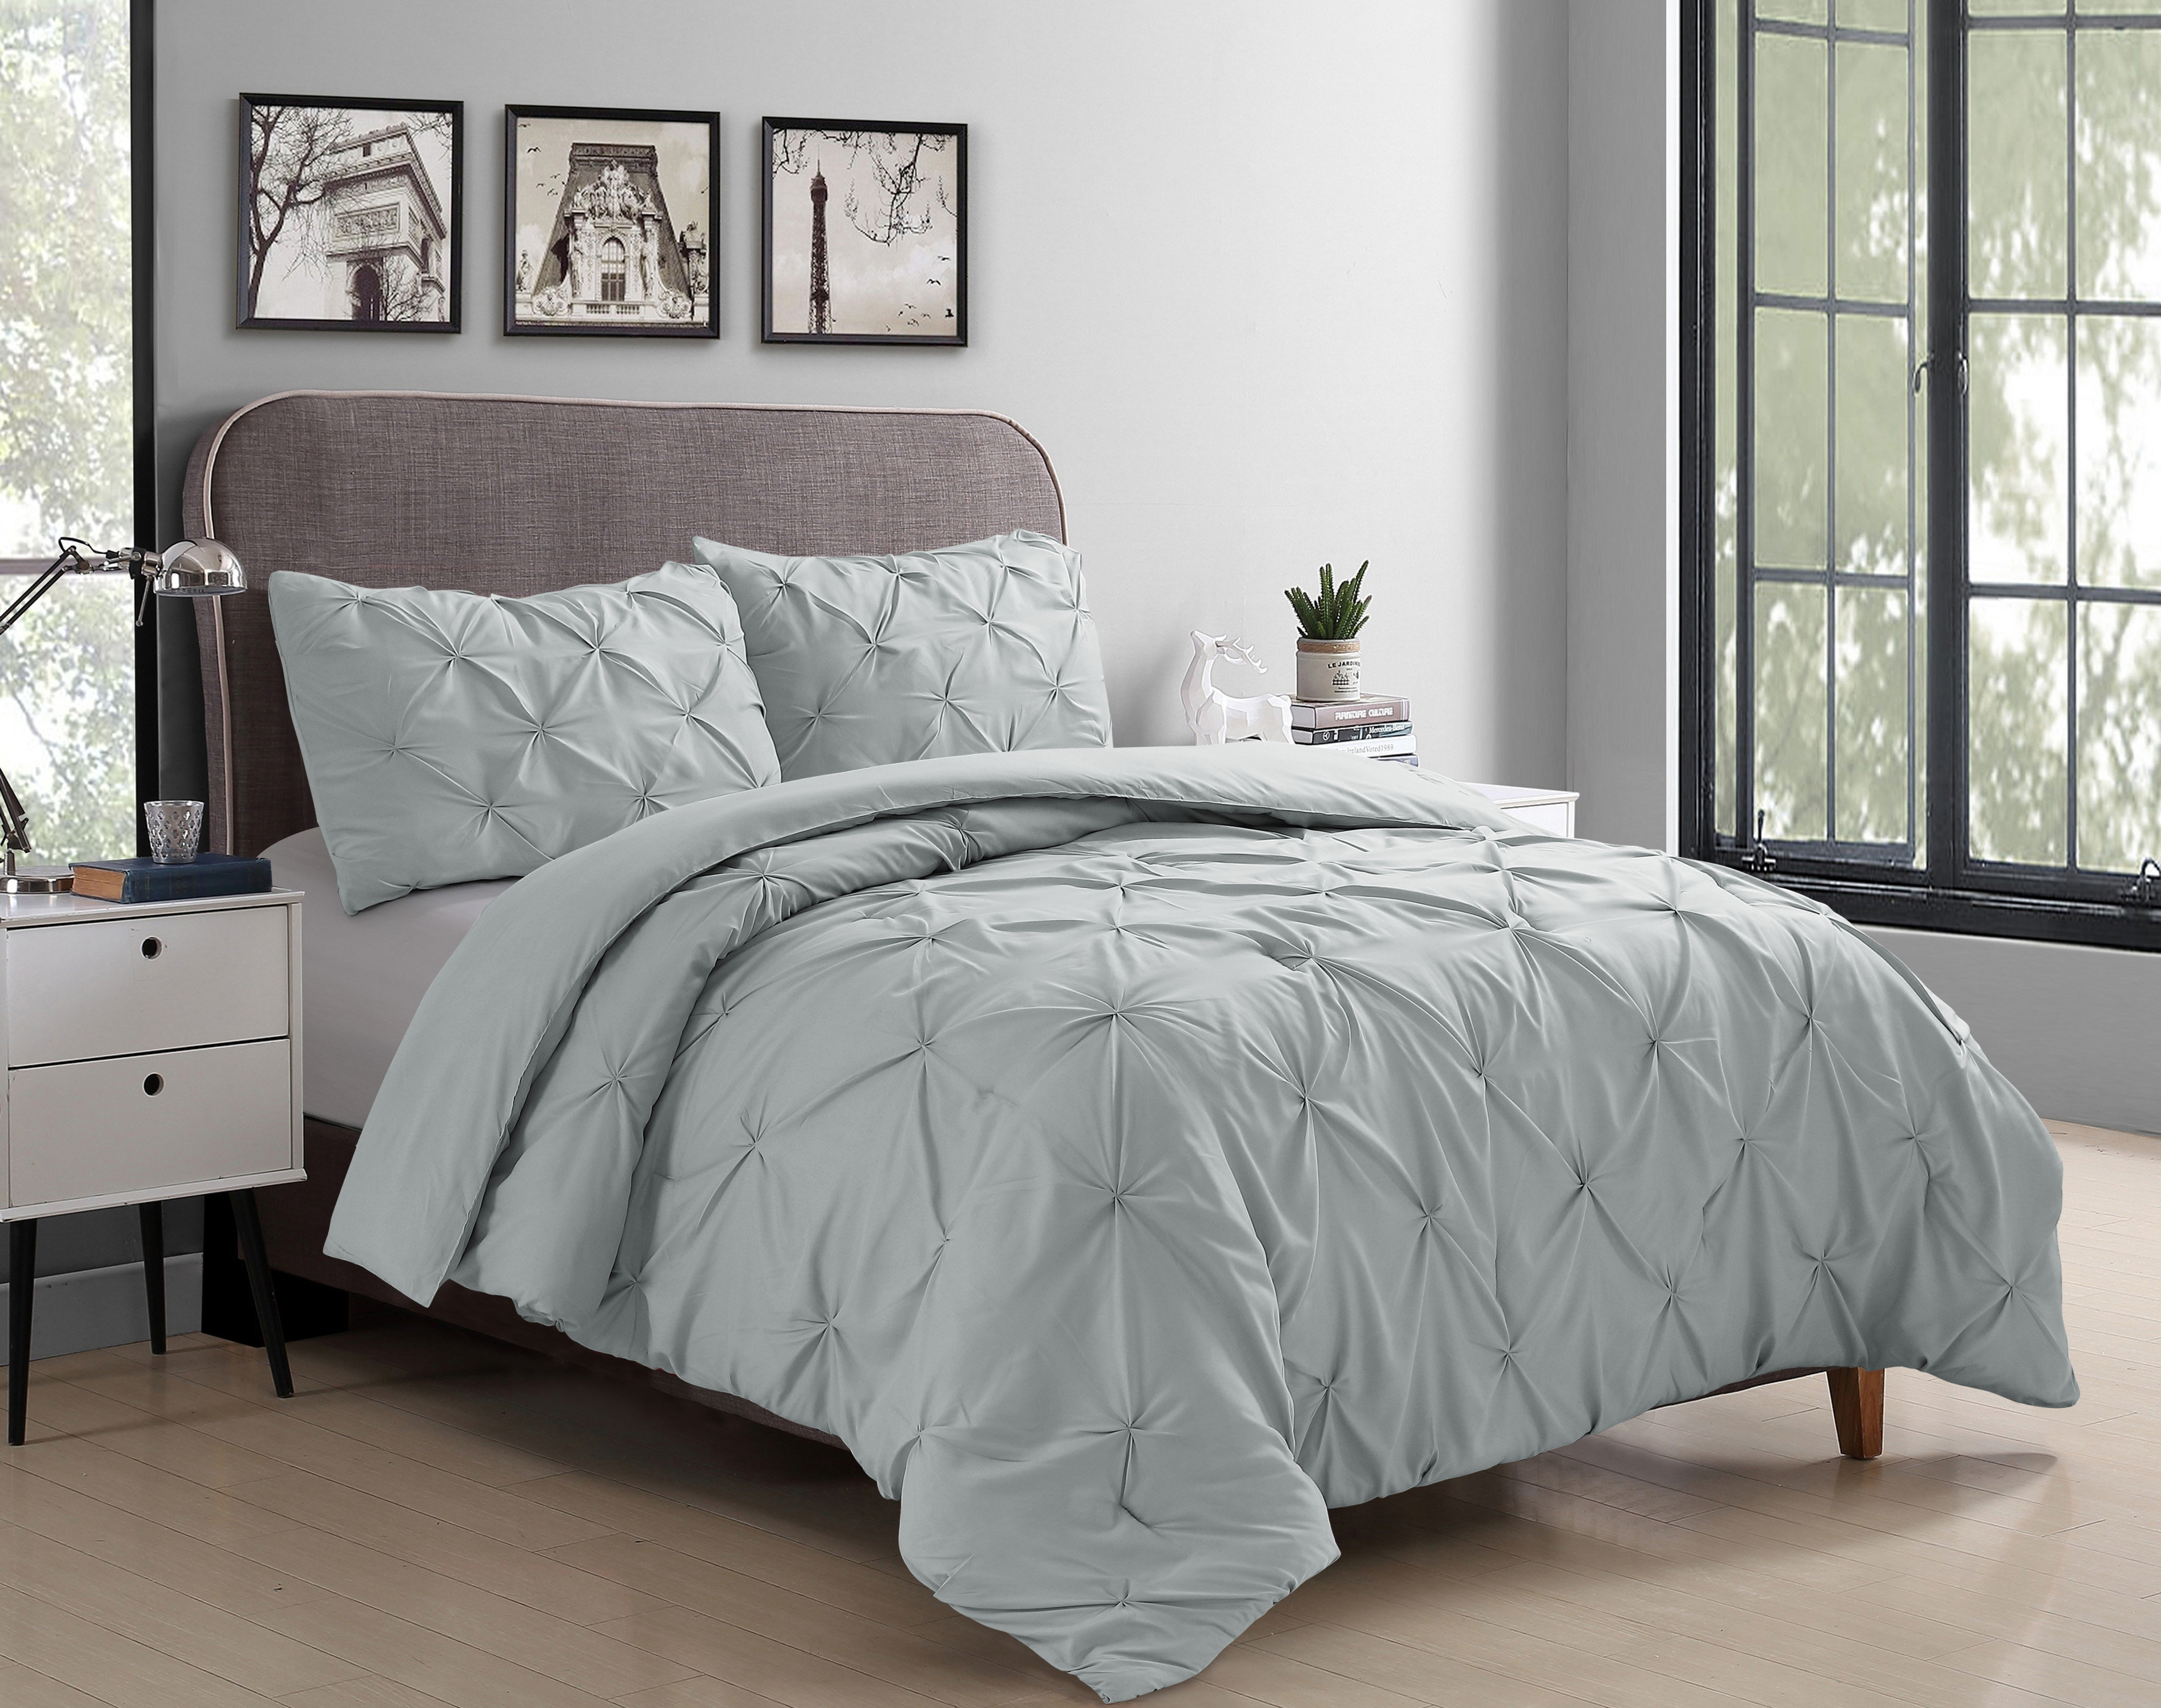 Living Renforcé Turn Bed Linen Set approx 155x220cm Light Blue/Grey NEW 